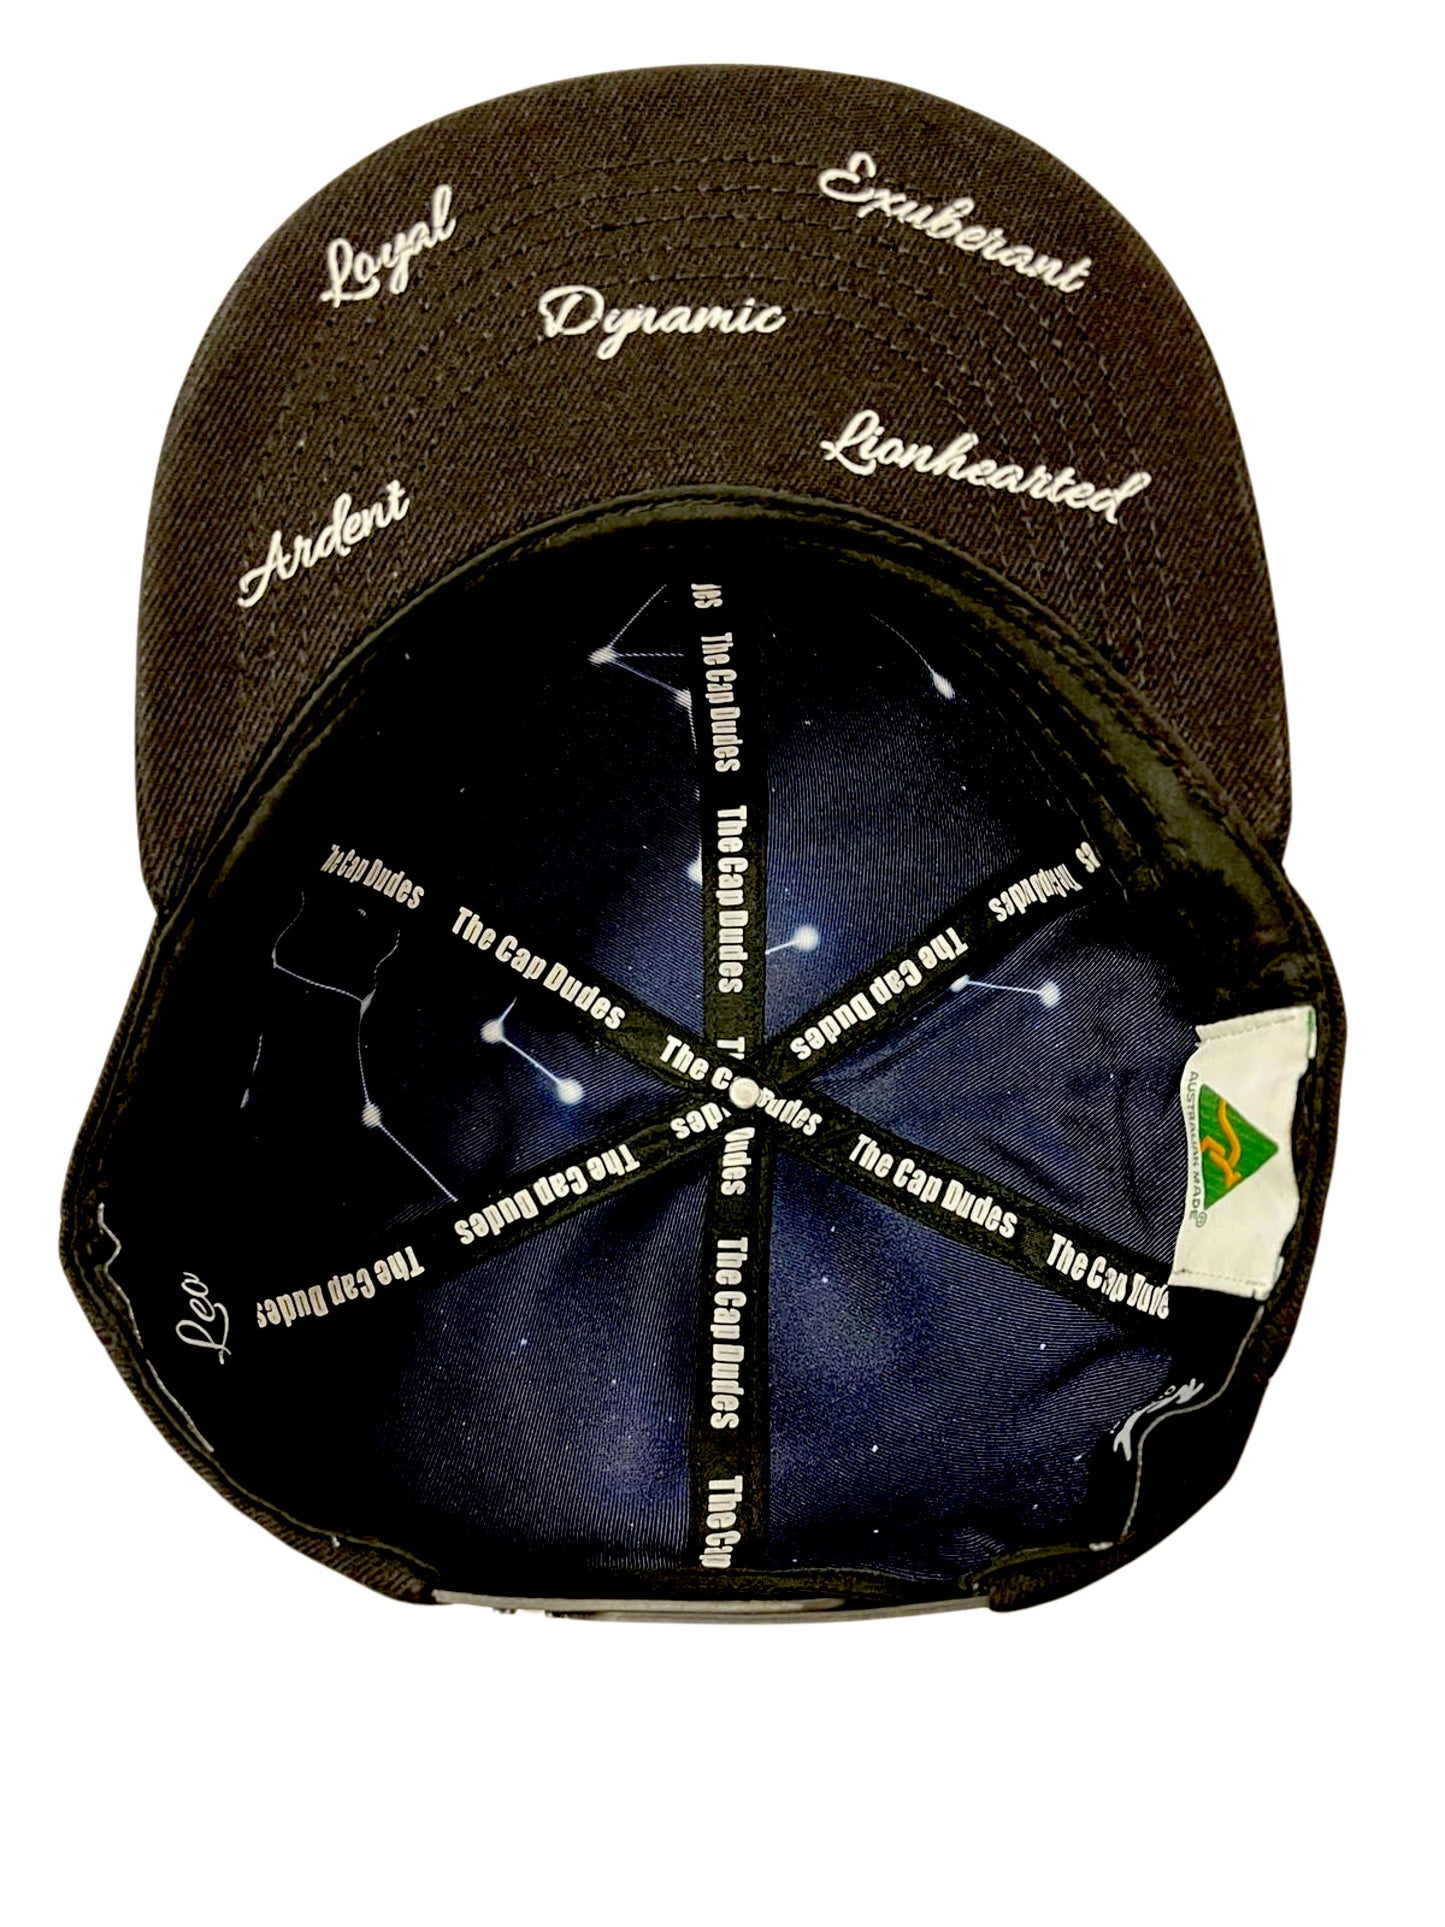 Leo Horoscope Baseball Hat - Under Brim - The Cap Dudes